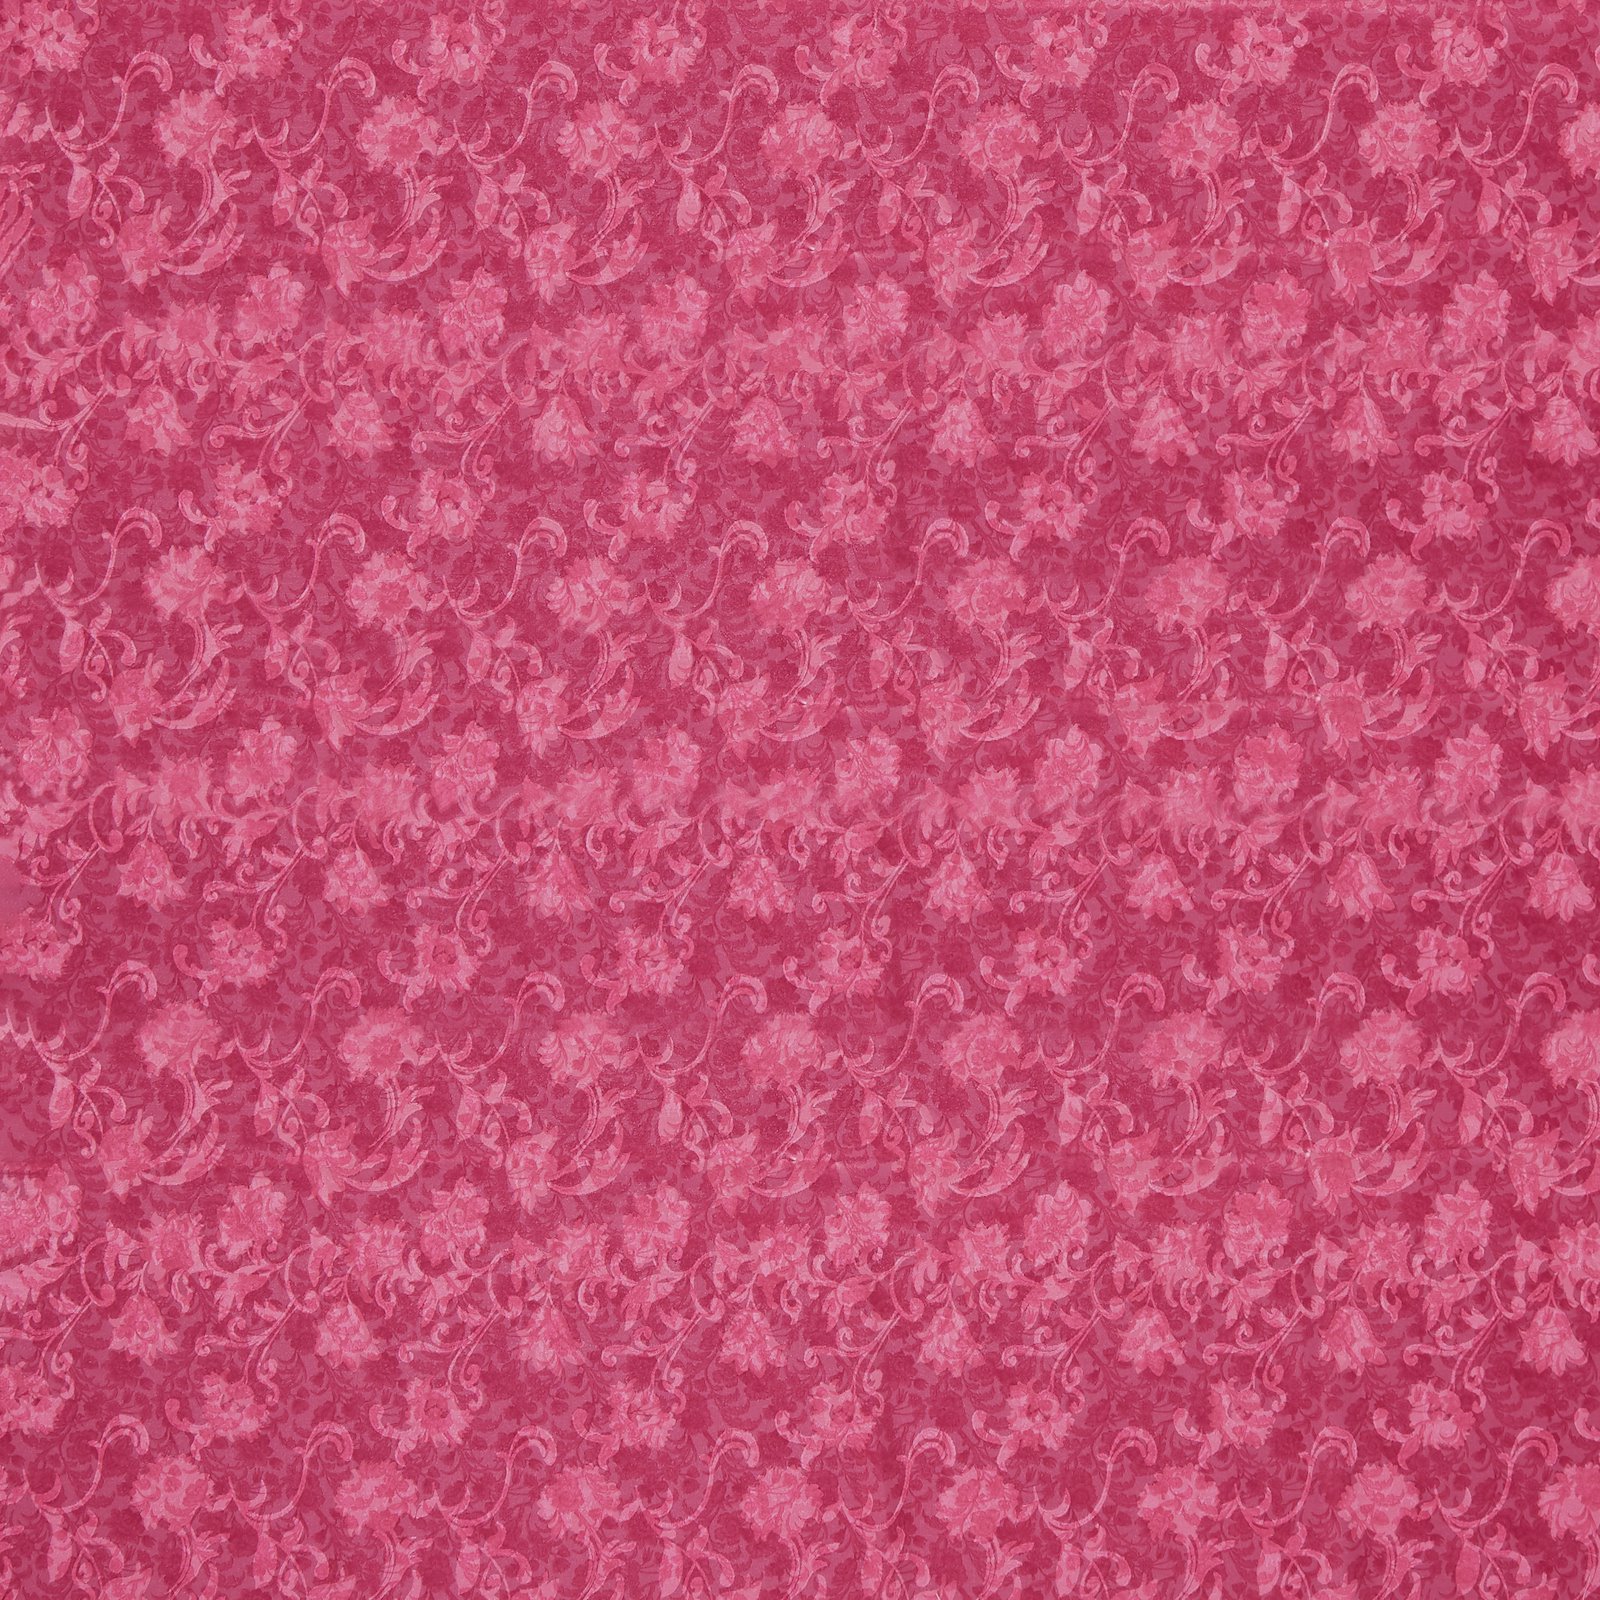 Jacquard gewebt pink mit Blumendruck 670294_pack_sp